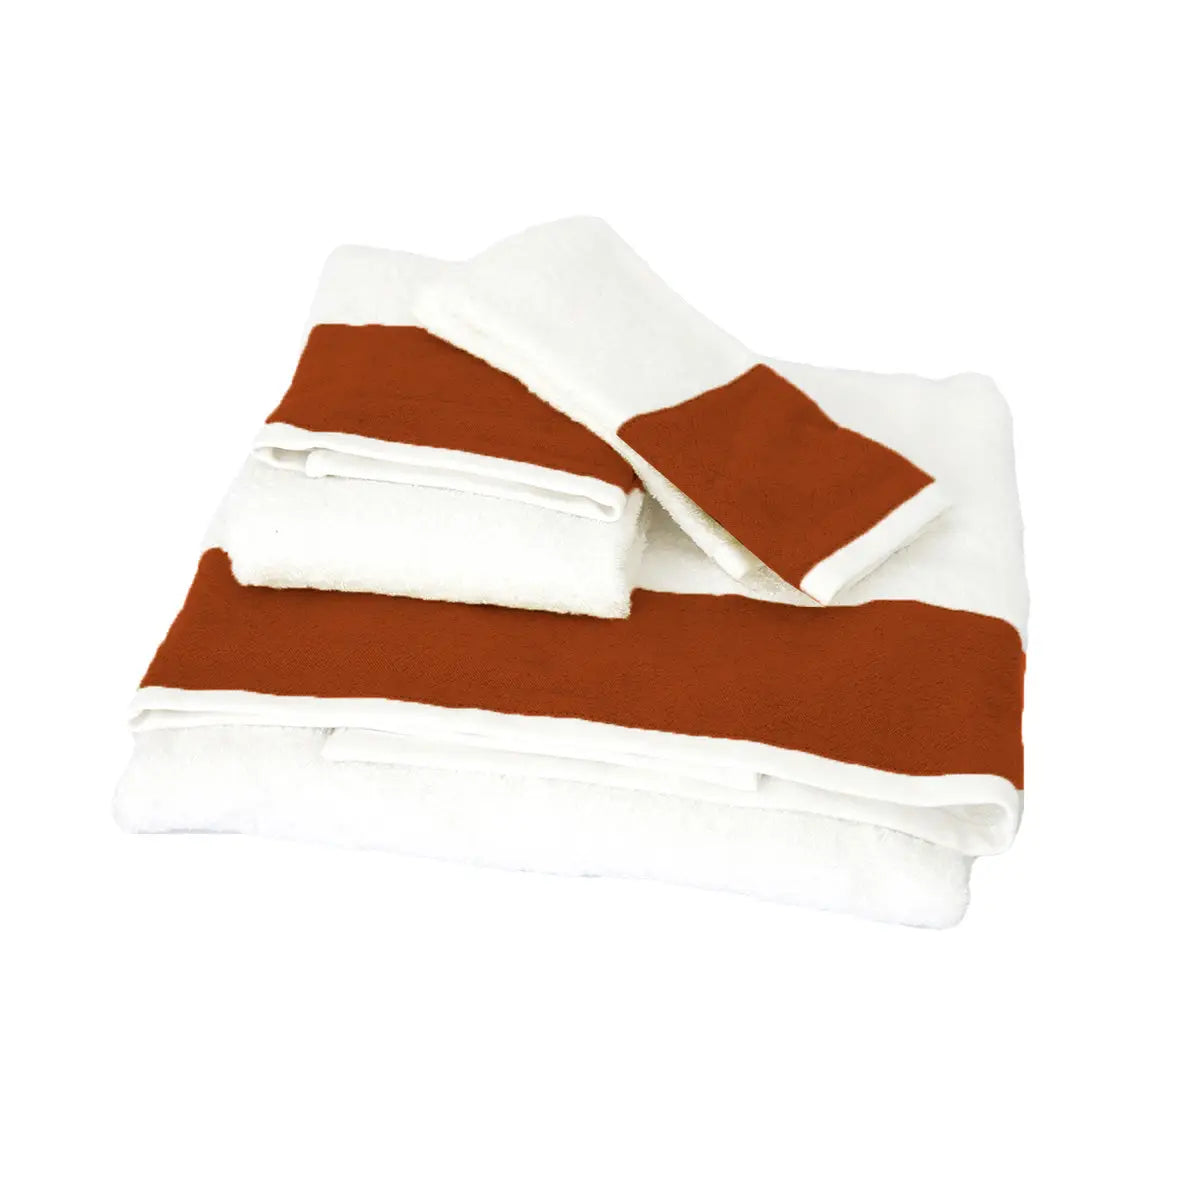 Towel With Soft Linen Trim In Orange